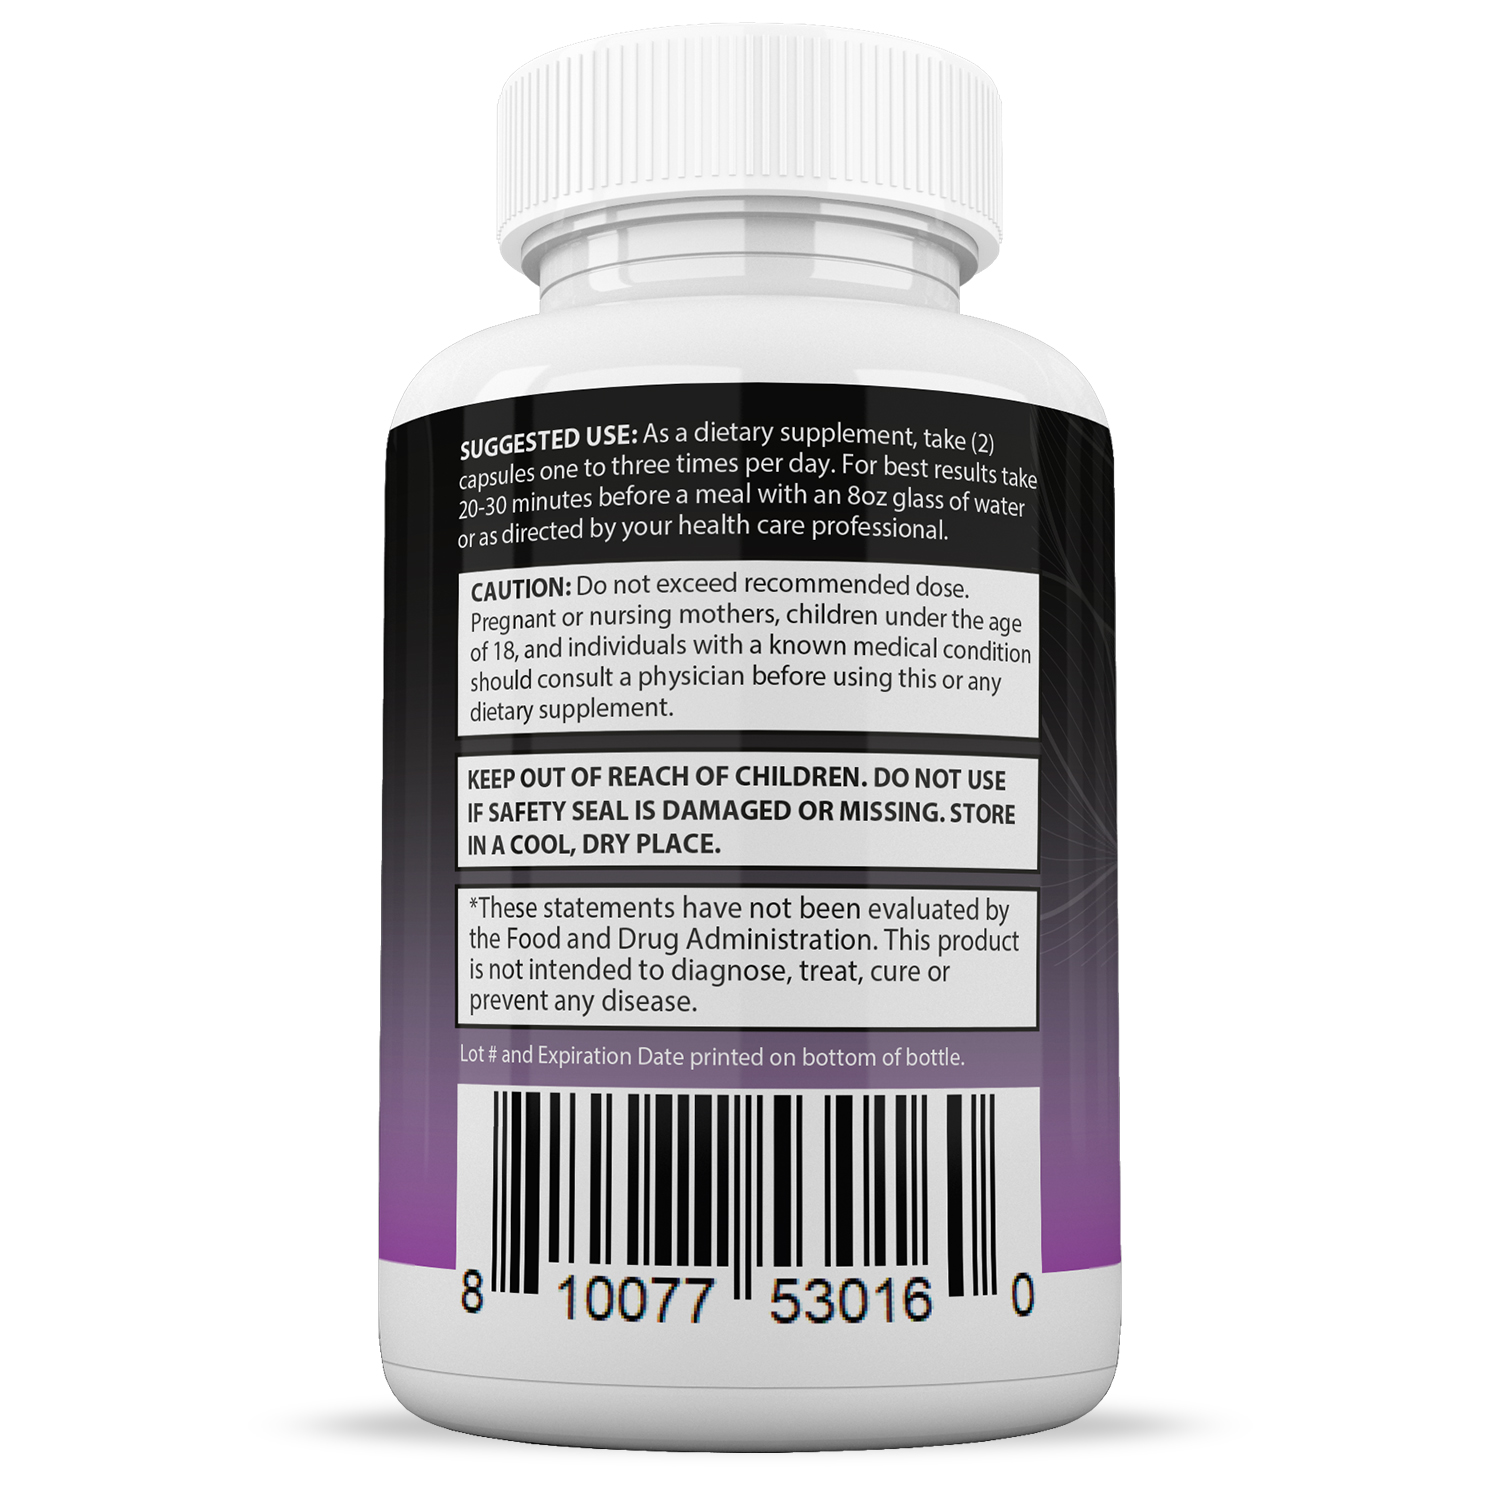 Advanced Keto 1500 Pills Includes Apple Cider Vinegar goBHB Exogenous Ketones Advanced Ketogenic Supplement Ketosis Support for Men Women 60 Capsule - image 3 of 5